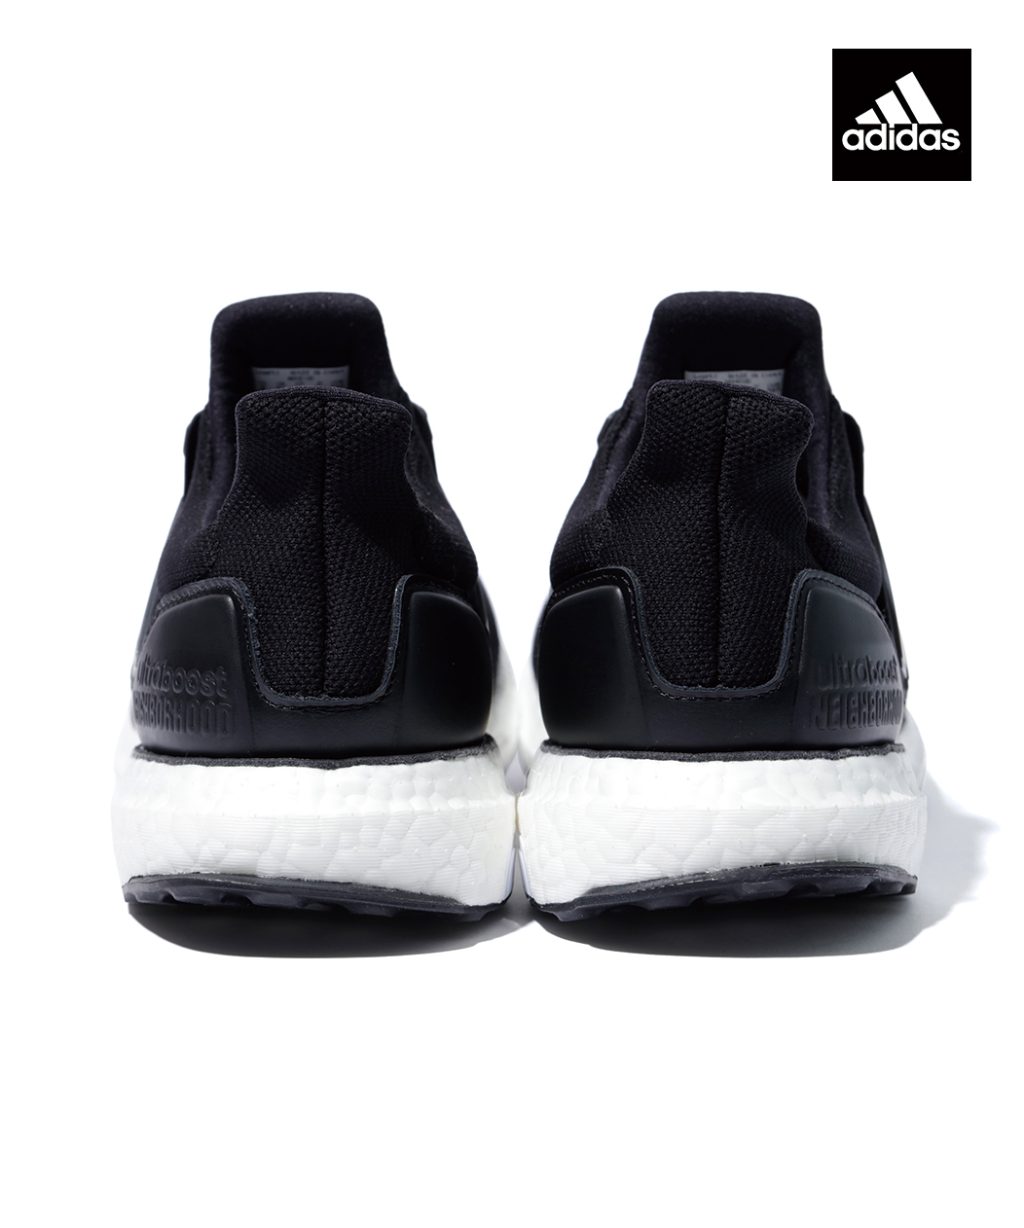 neighborhood-adidas-ultra-boost-black-white-release-20190427